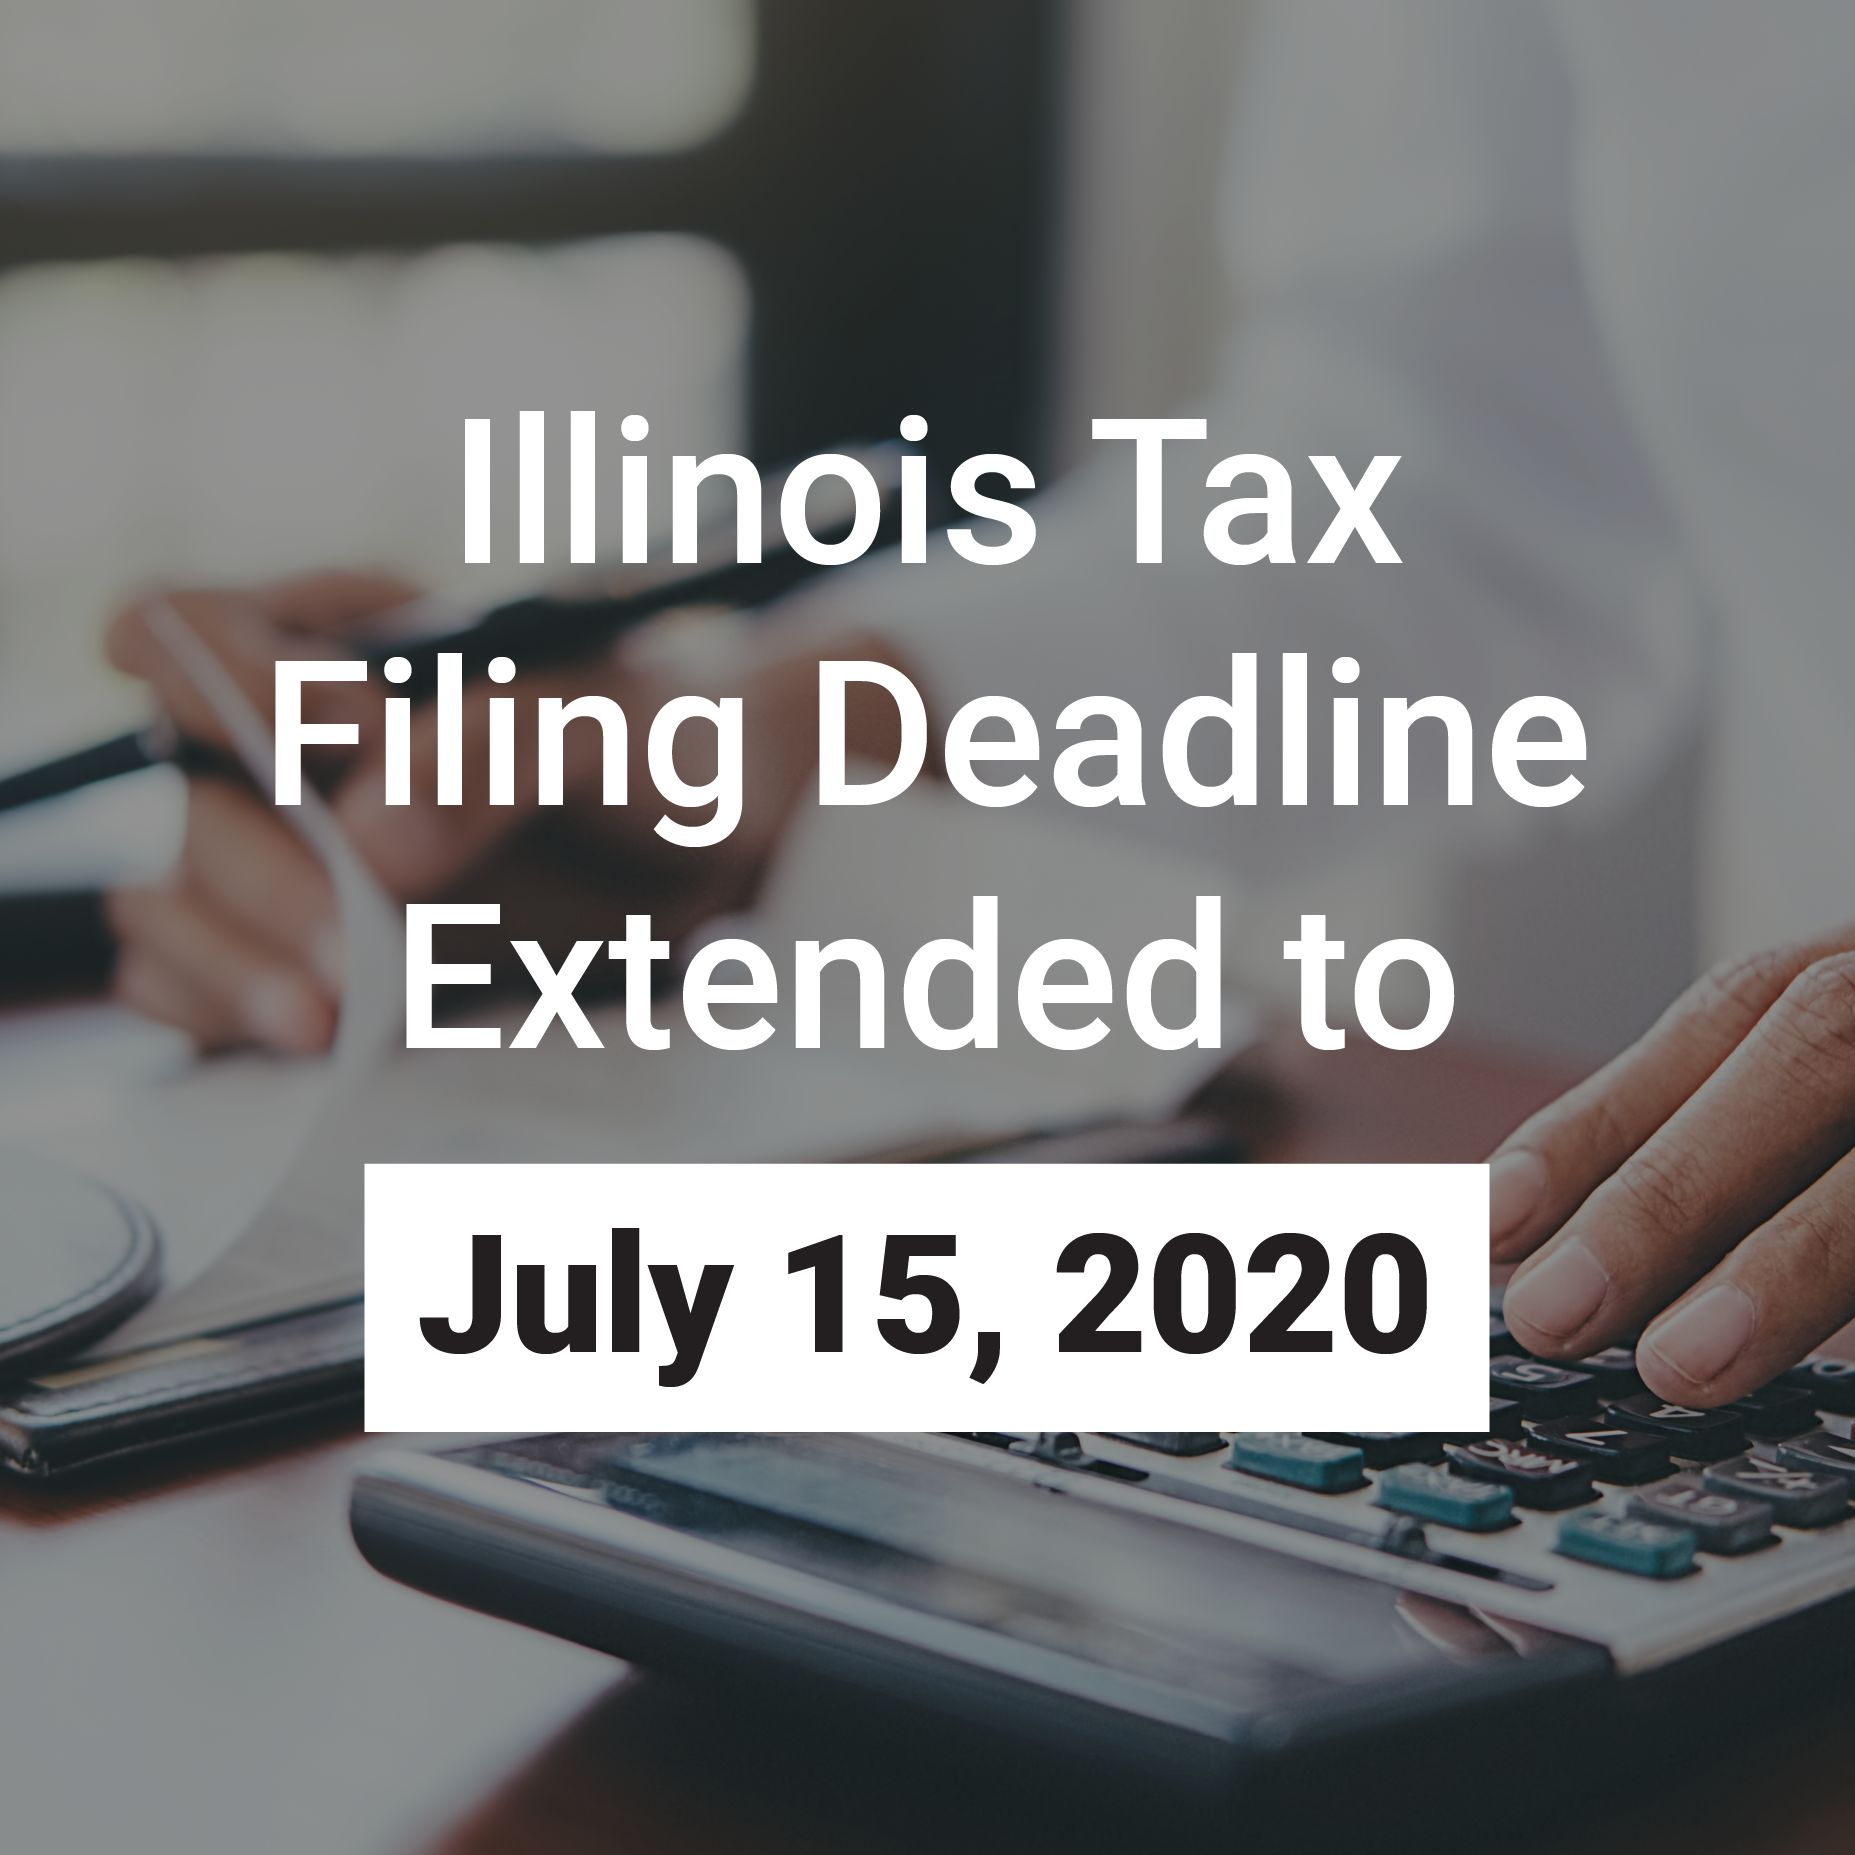 Illinois Tax Filing Deadline Extended